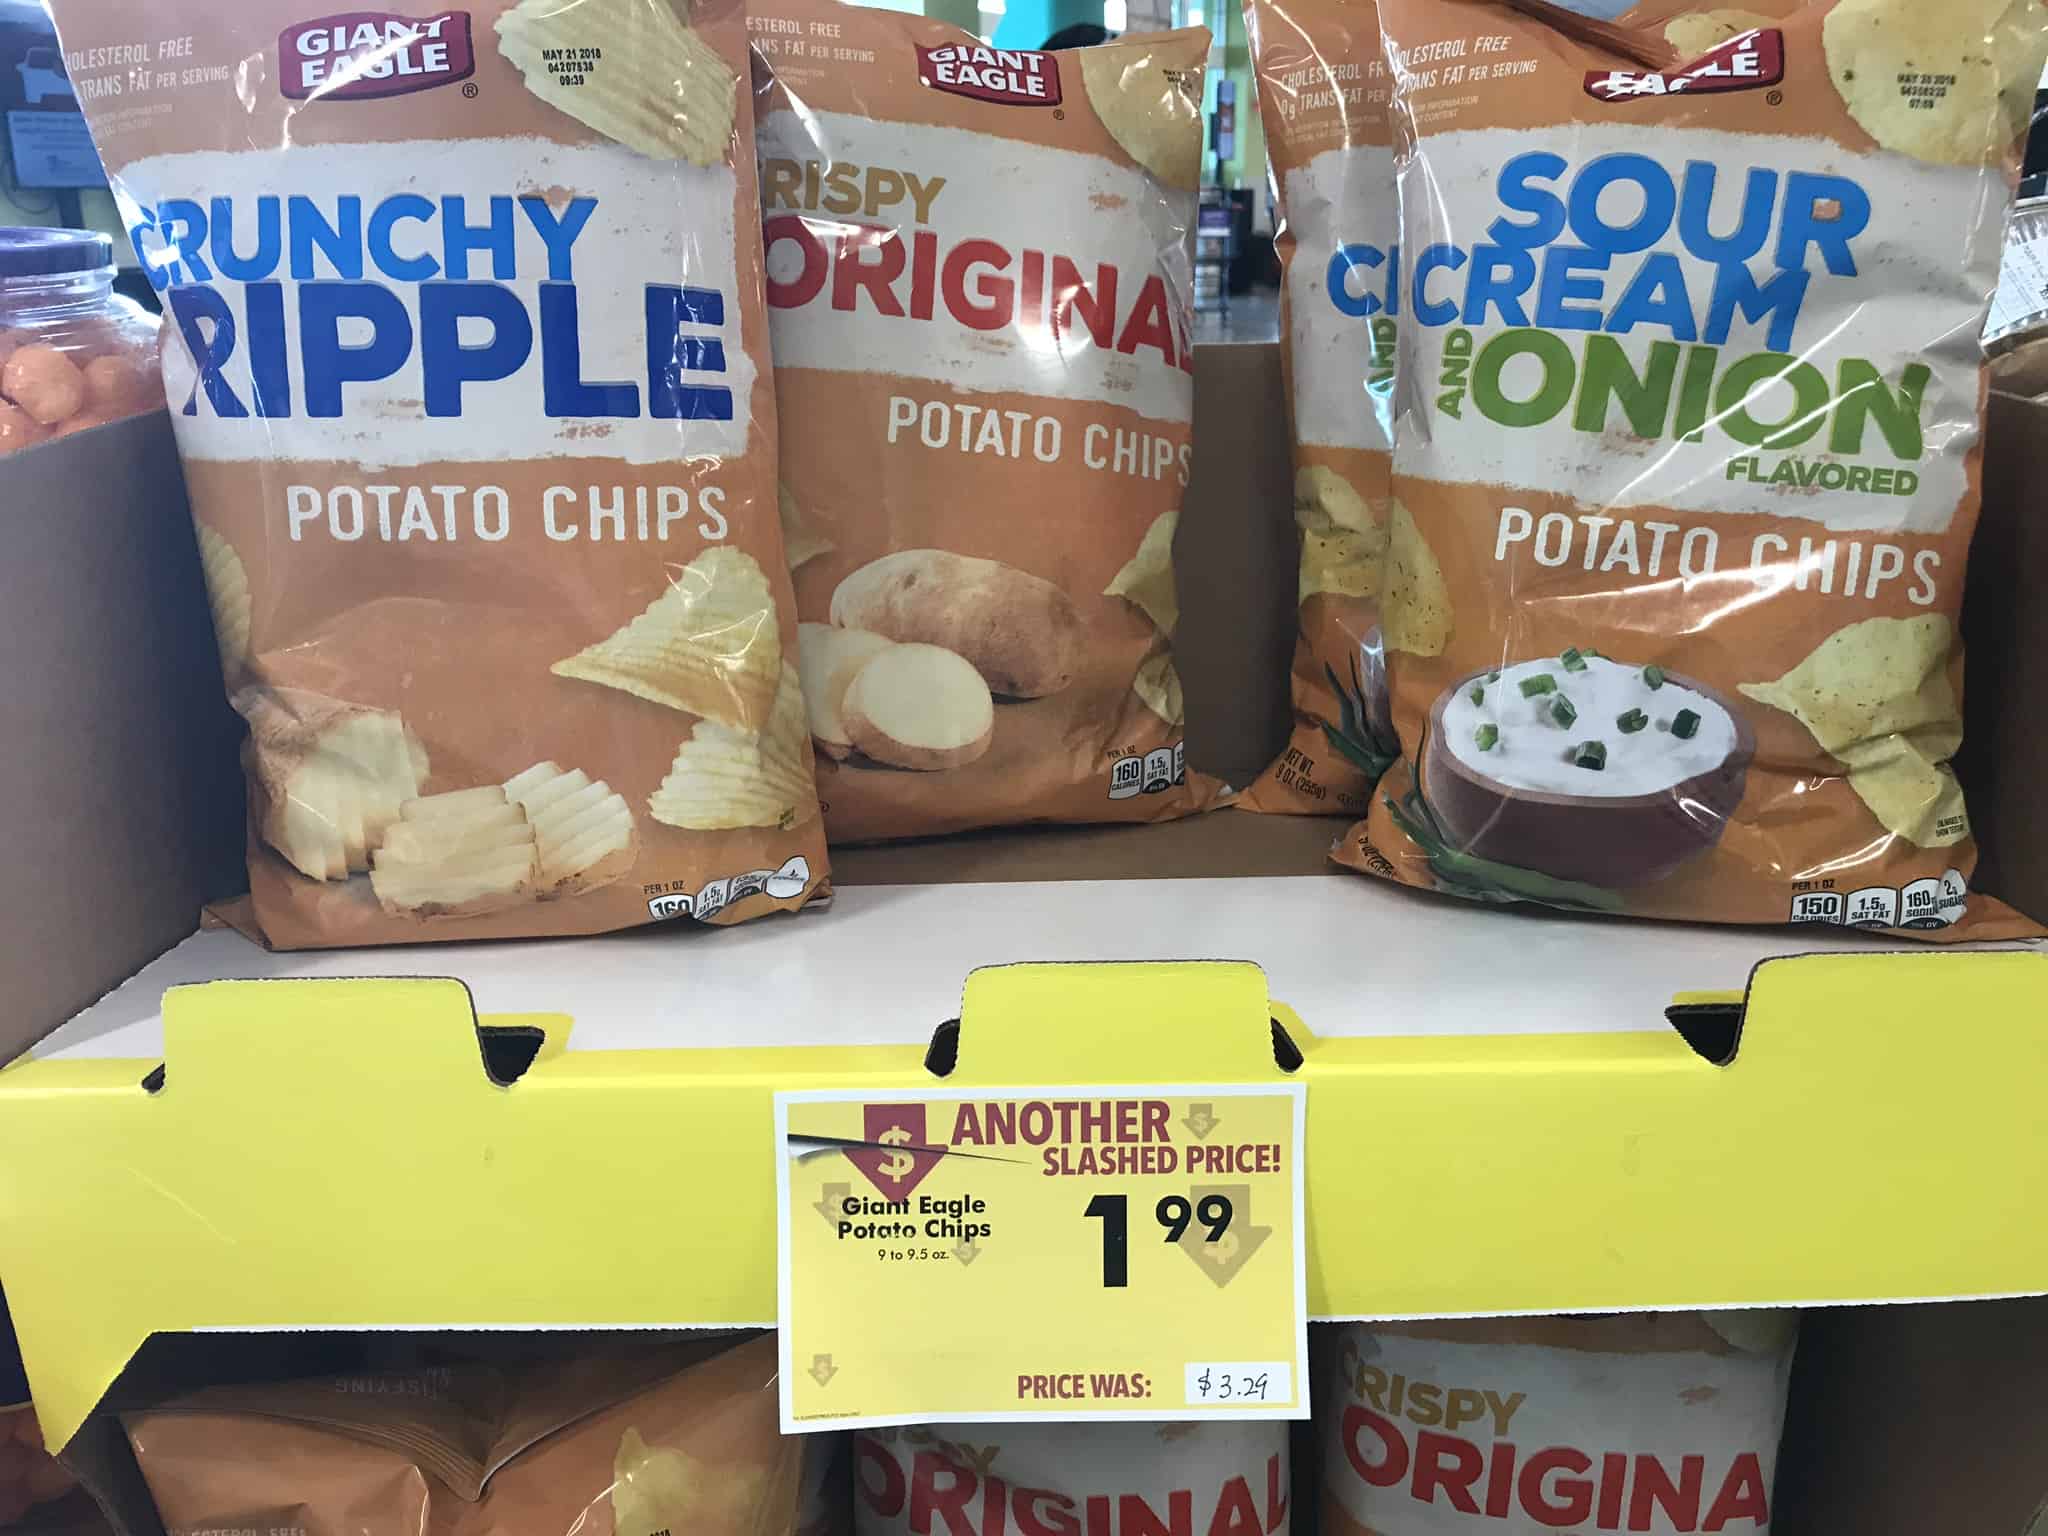 Store Brand Potato Chips Taste Just Like Brand Name